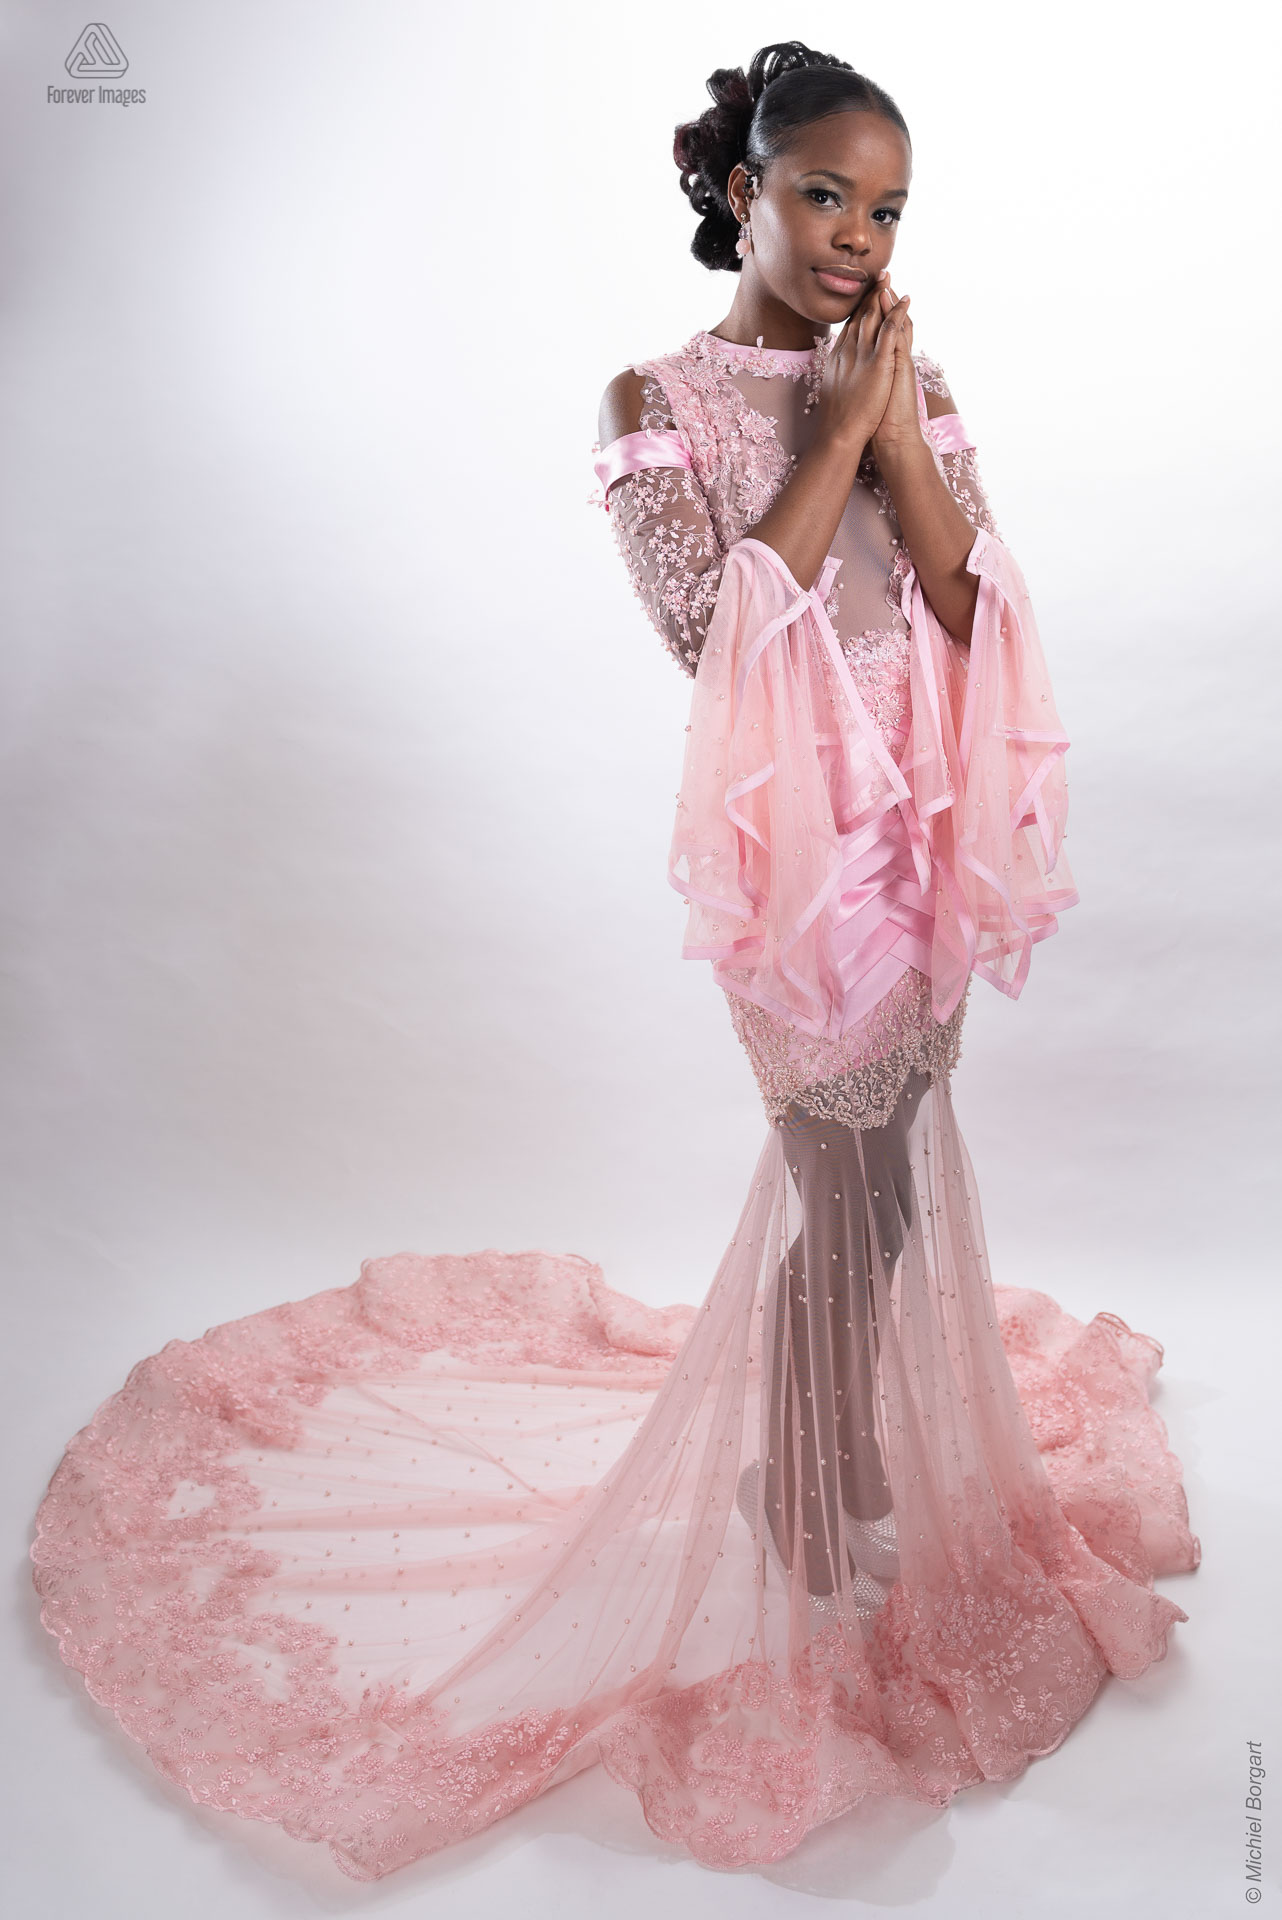 Fashion photo pink dress total | Mariangel Dolorita Miss Reina Seu Ronald Rizzo Piu Colore | Fashion Photographer Michiel Borgart - Forever Images.